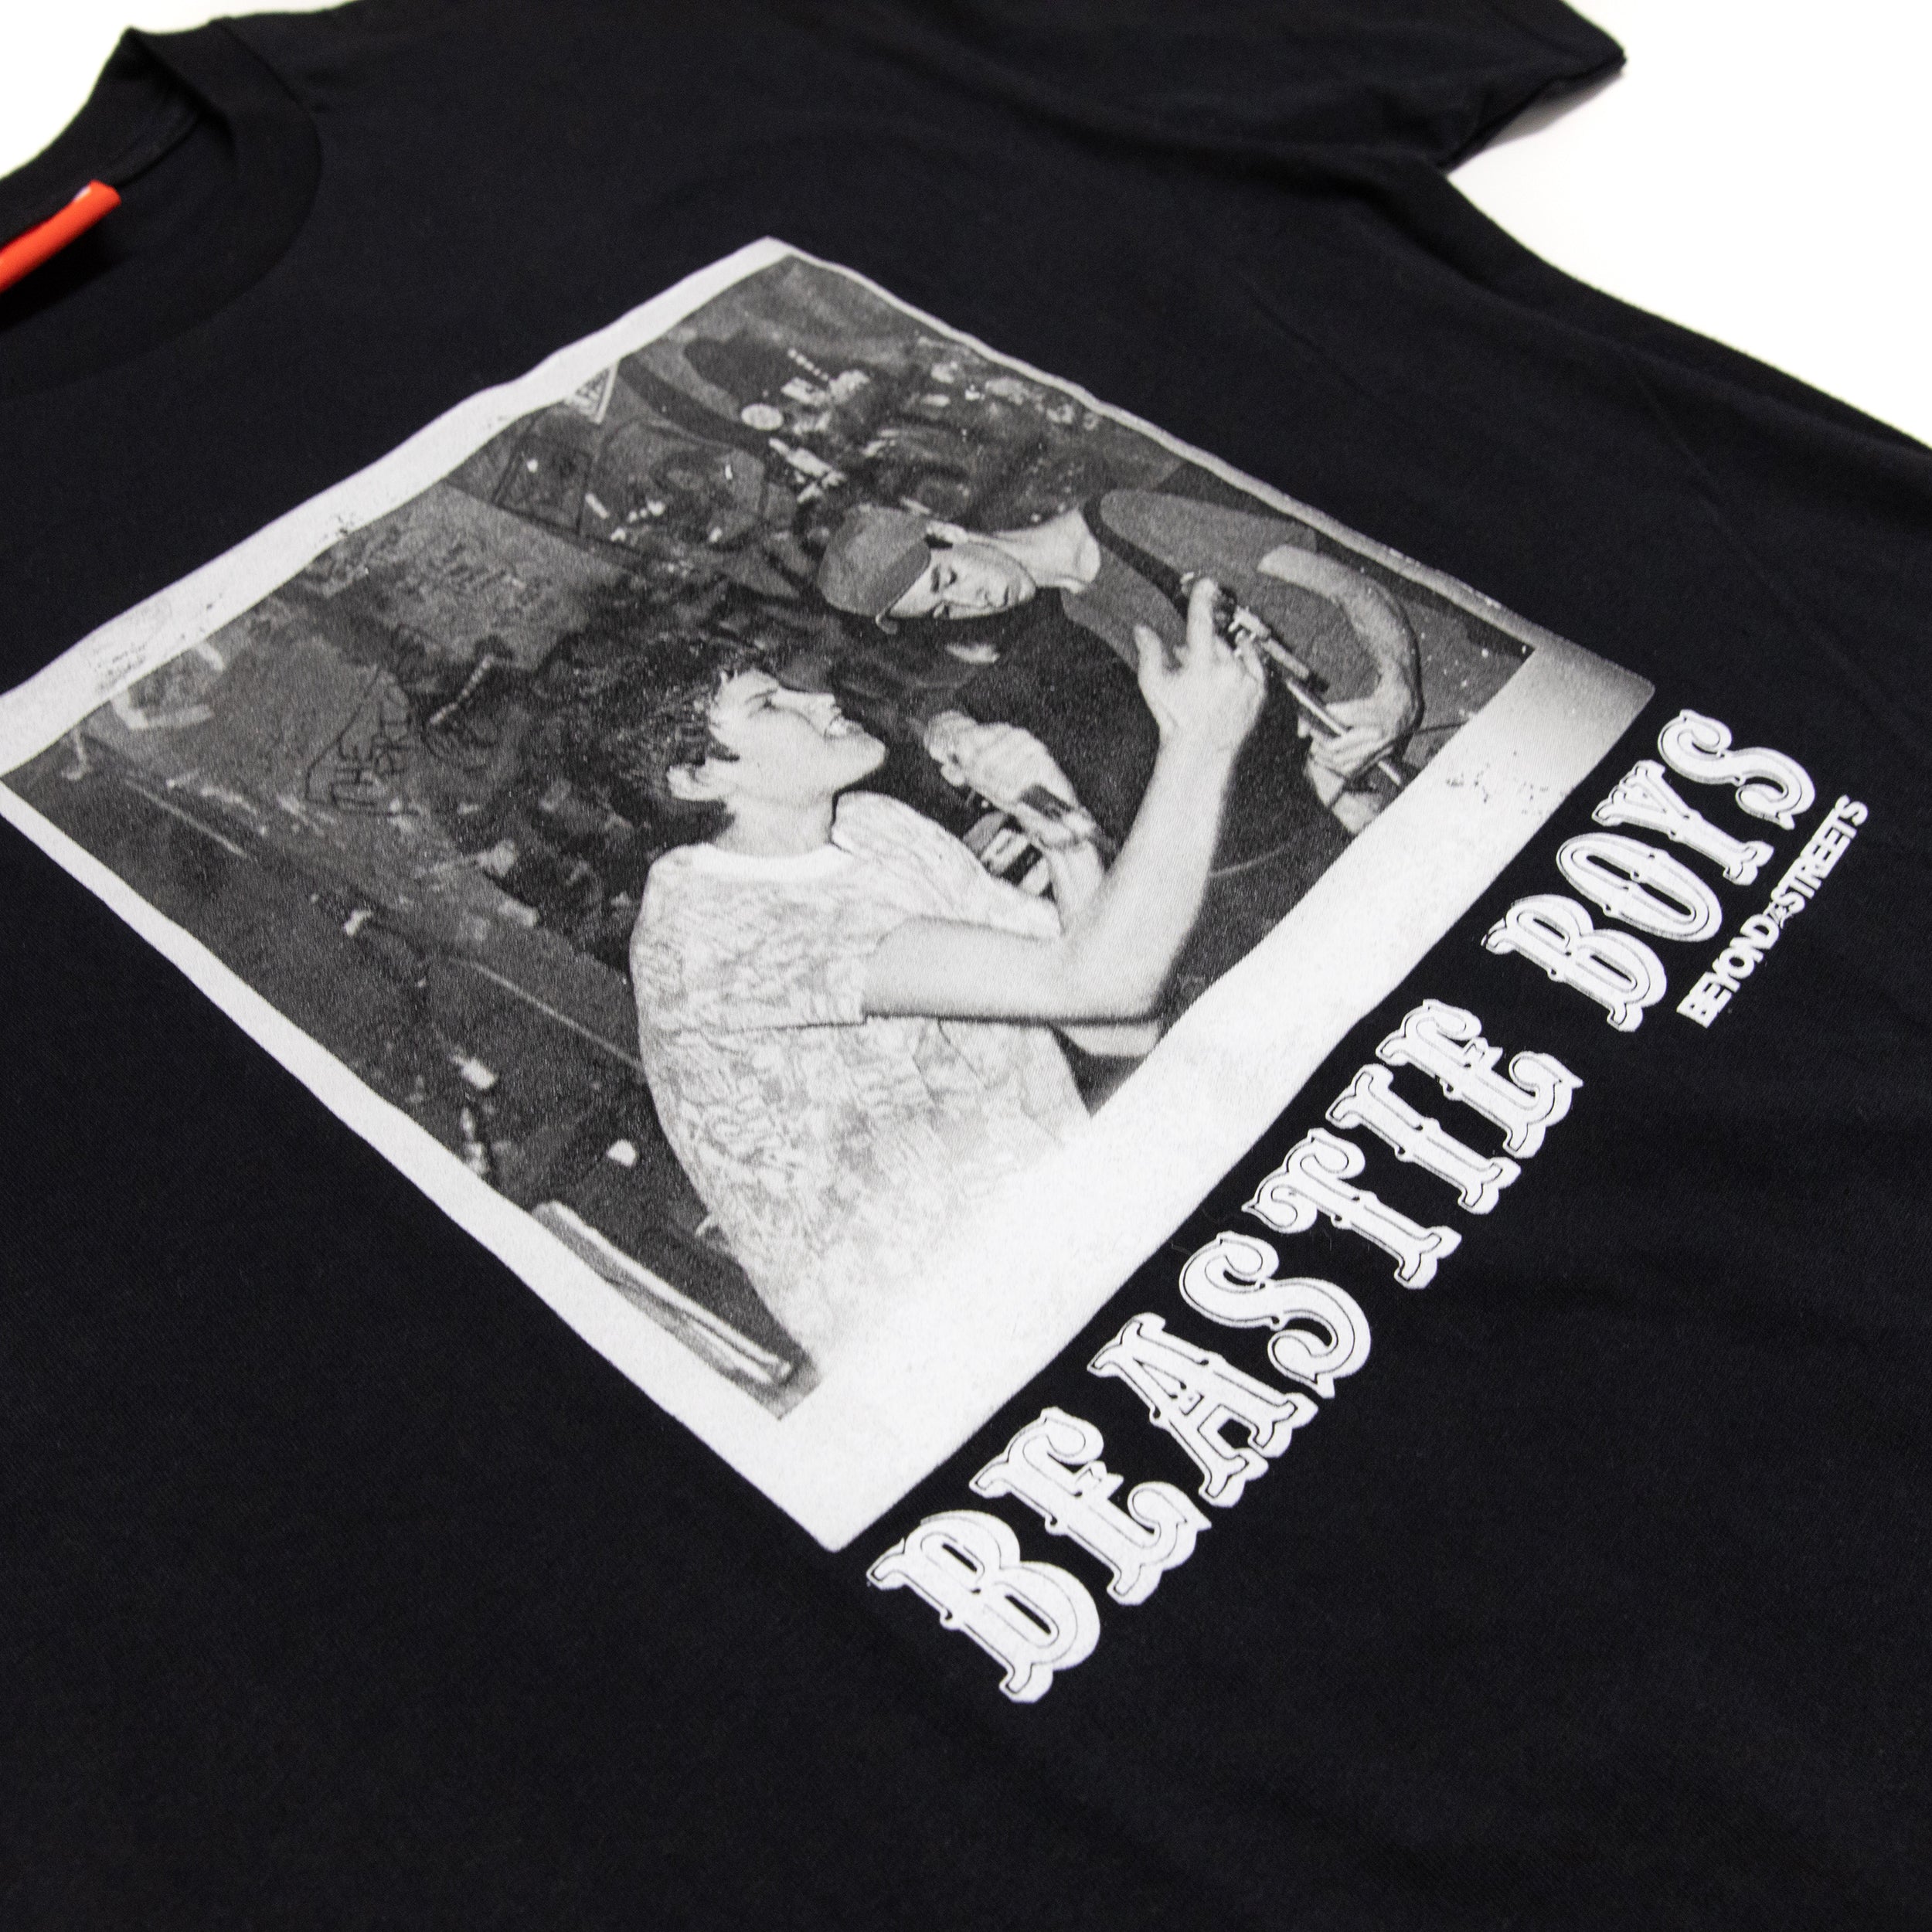 Beastie Boys x BEYOND THE STREETS & Dover Street Market 